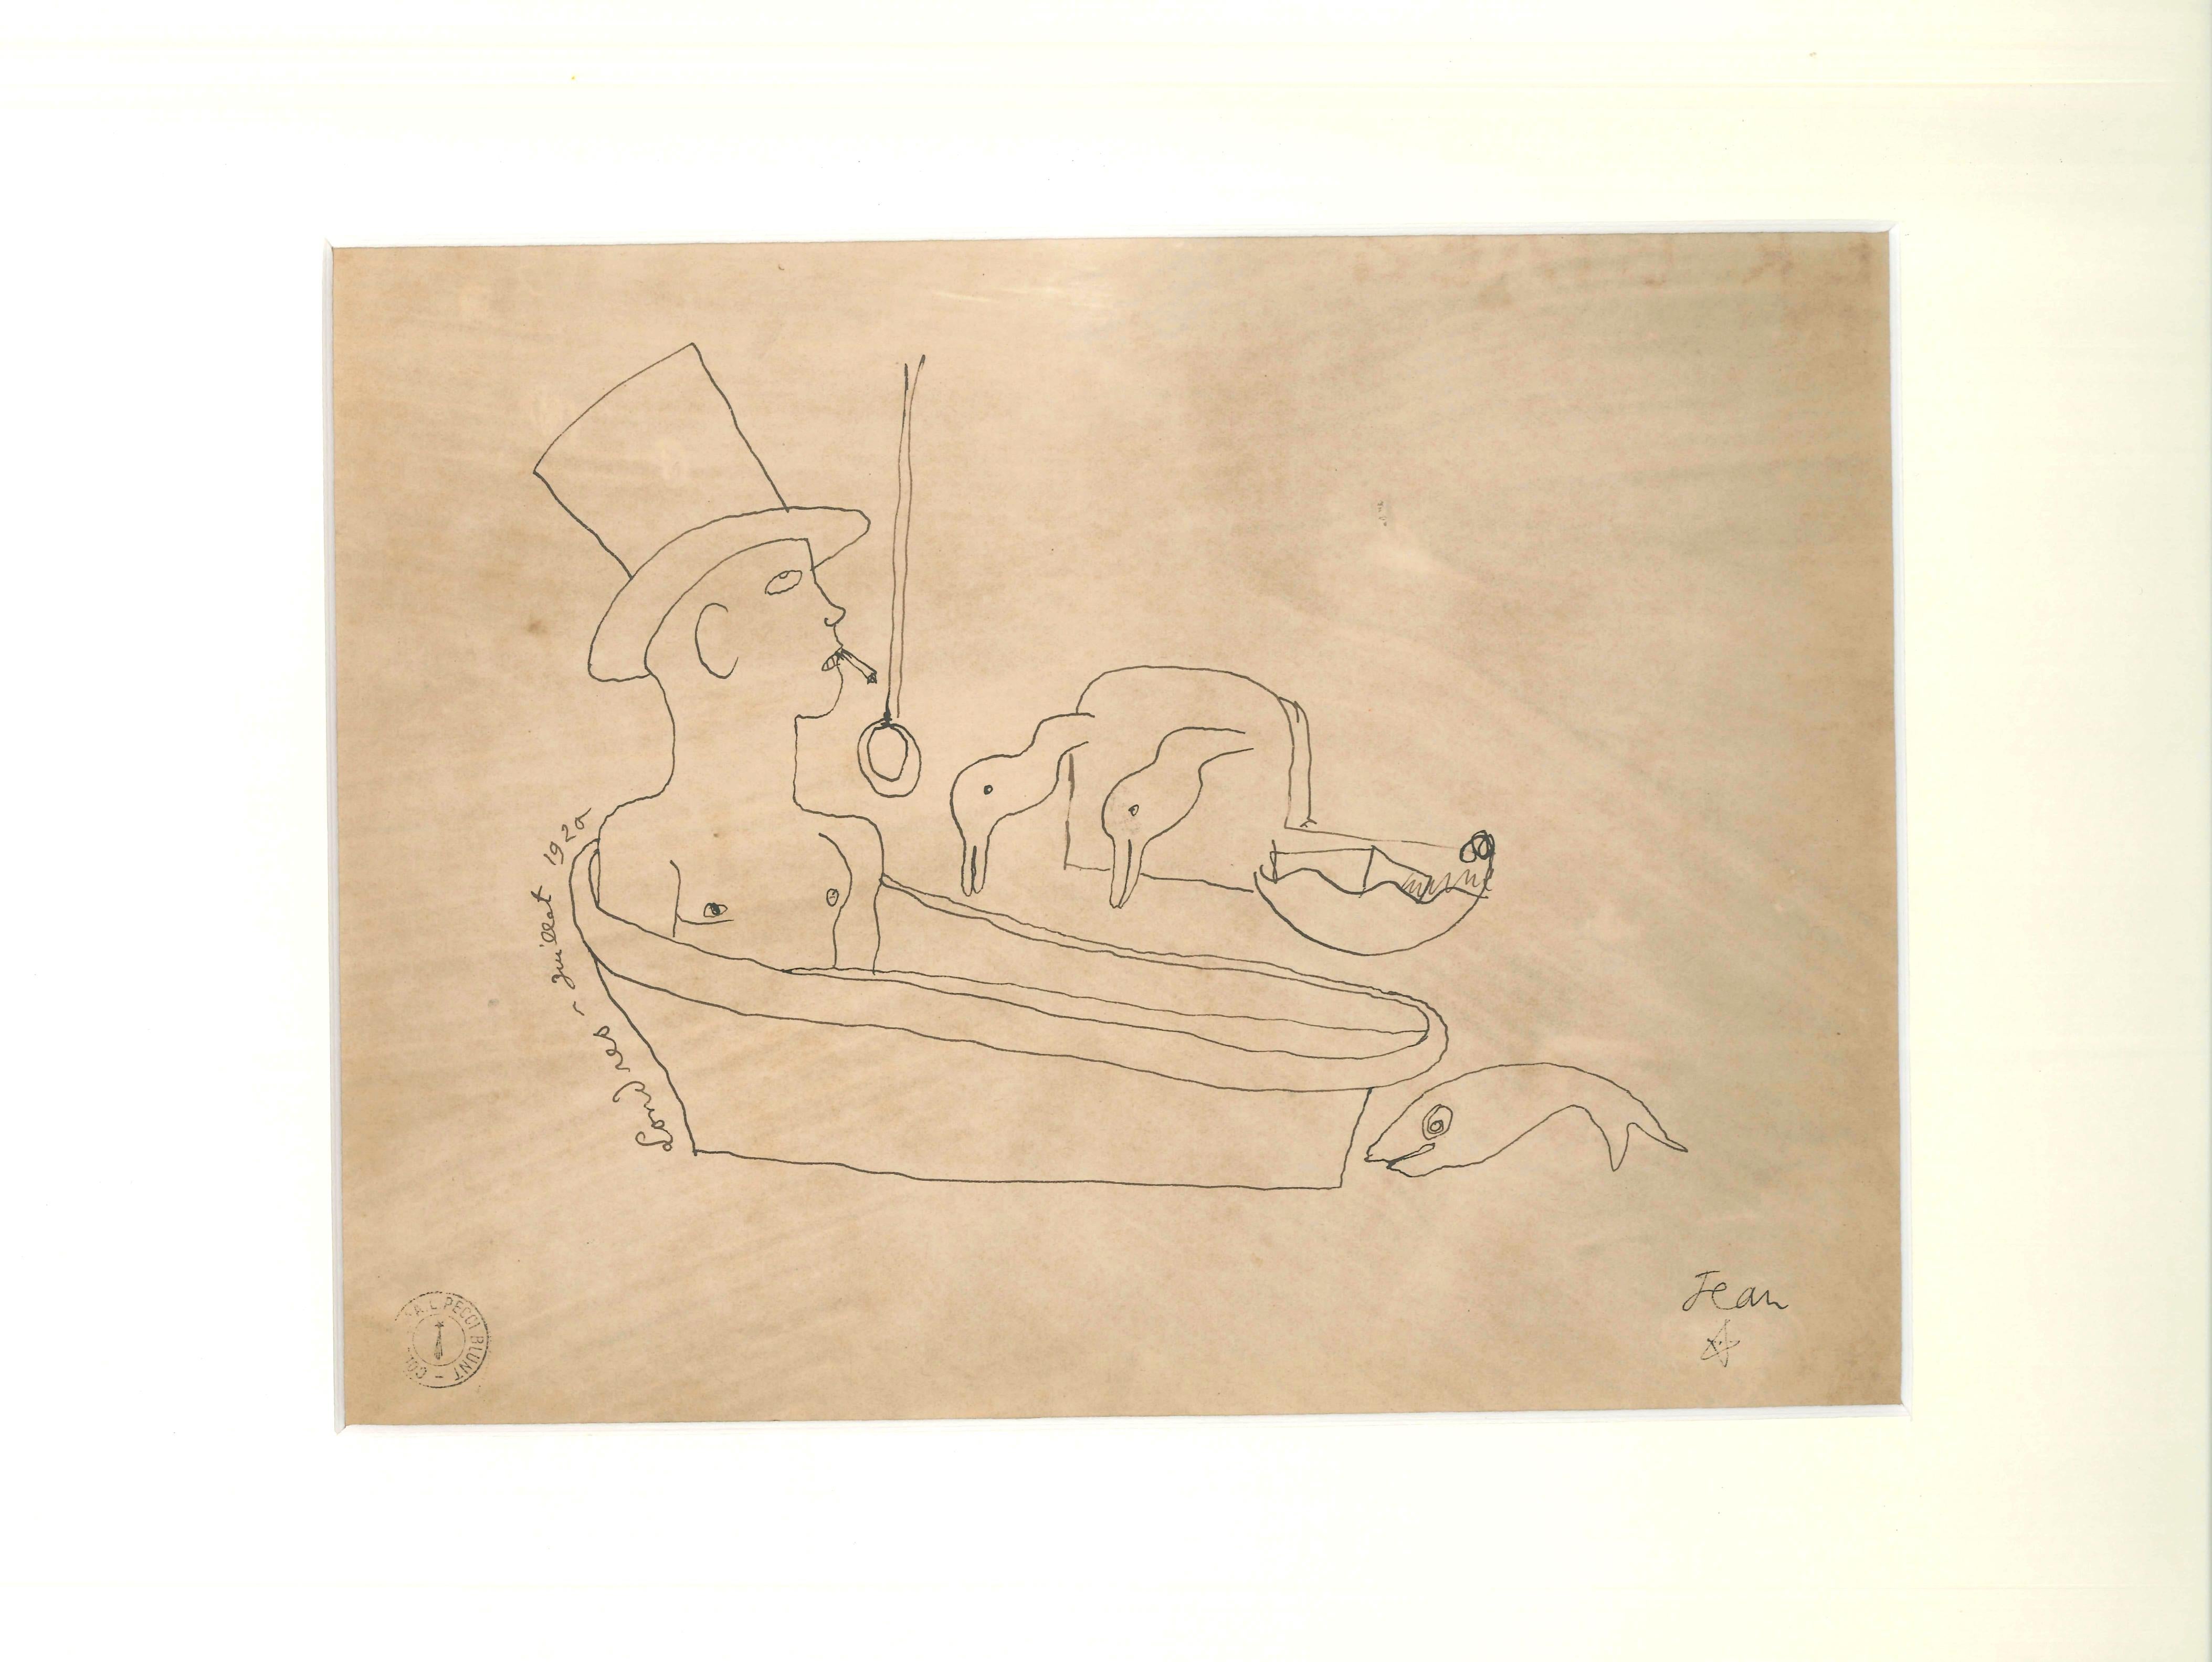 London Londres - Original China-Tintezeichnung von J. Cocteau - 1920 (Moderne), Art, von Jean Cocteau